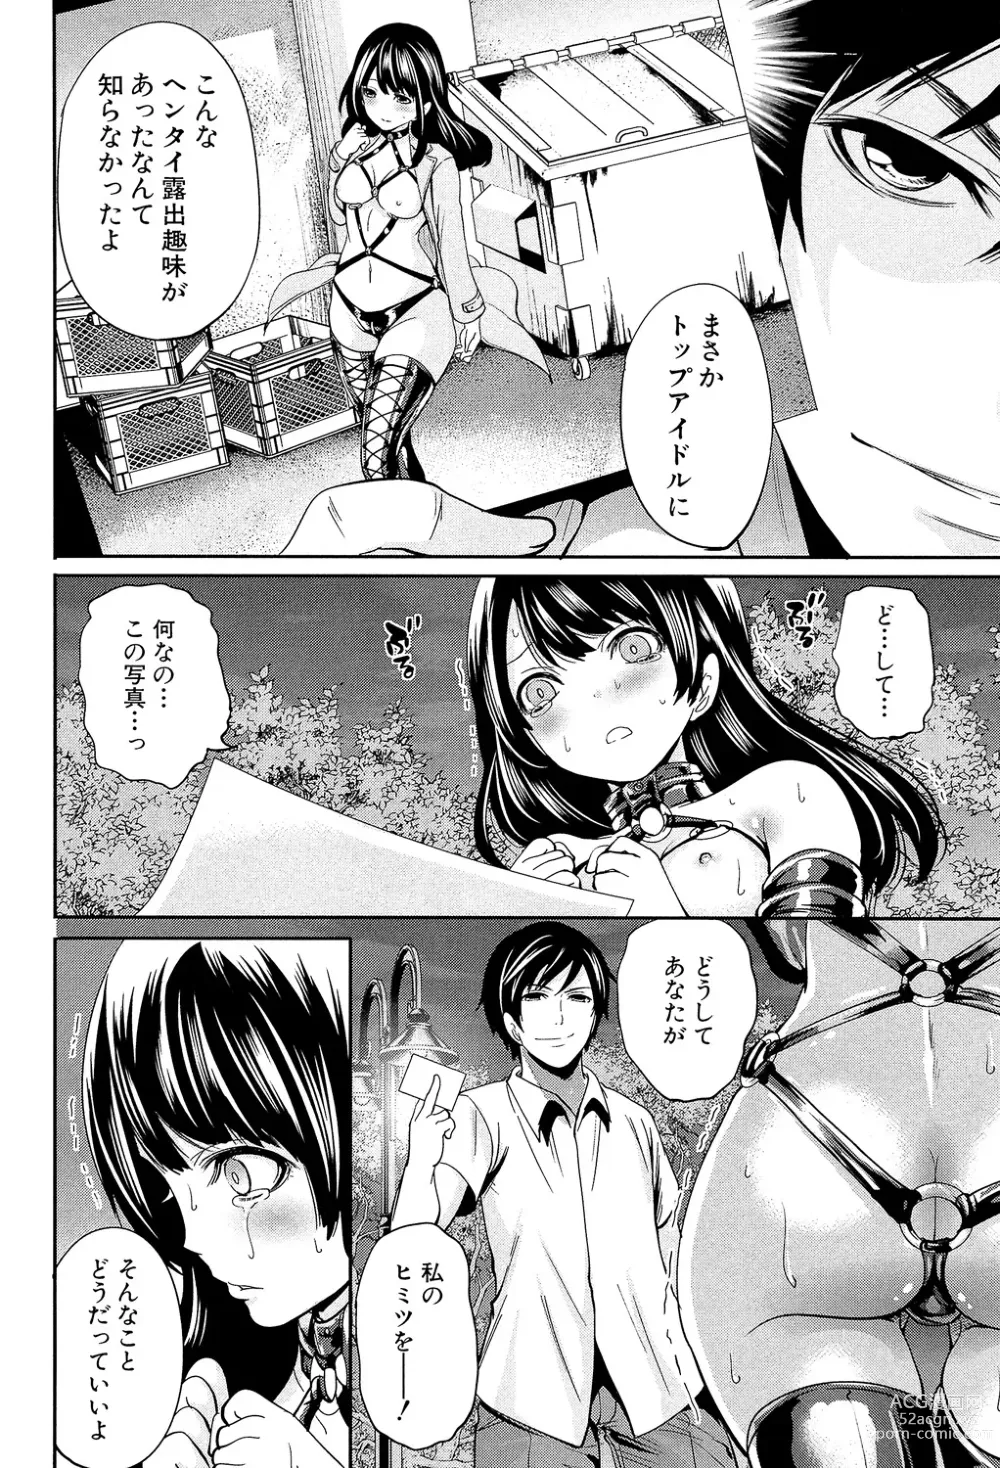 Page 24 of manga Kanojo-tachi wa Abakareta